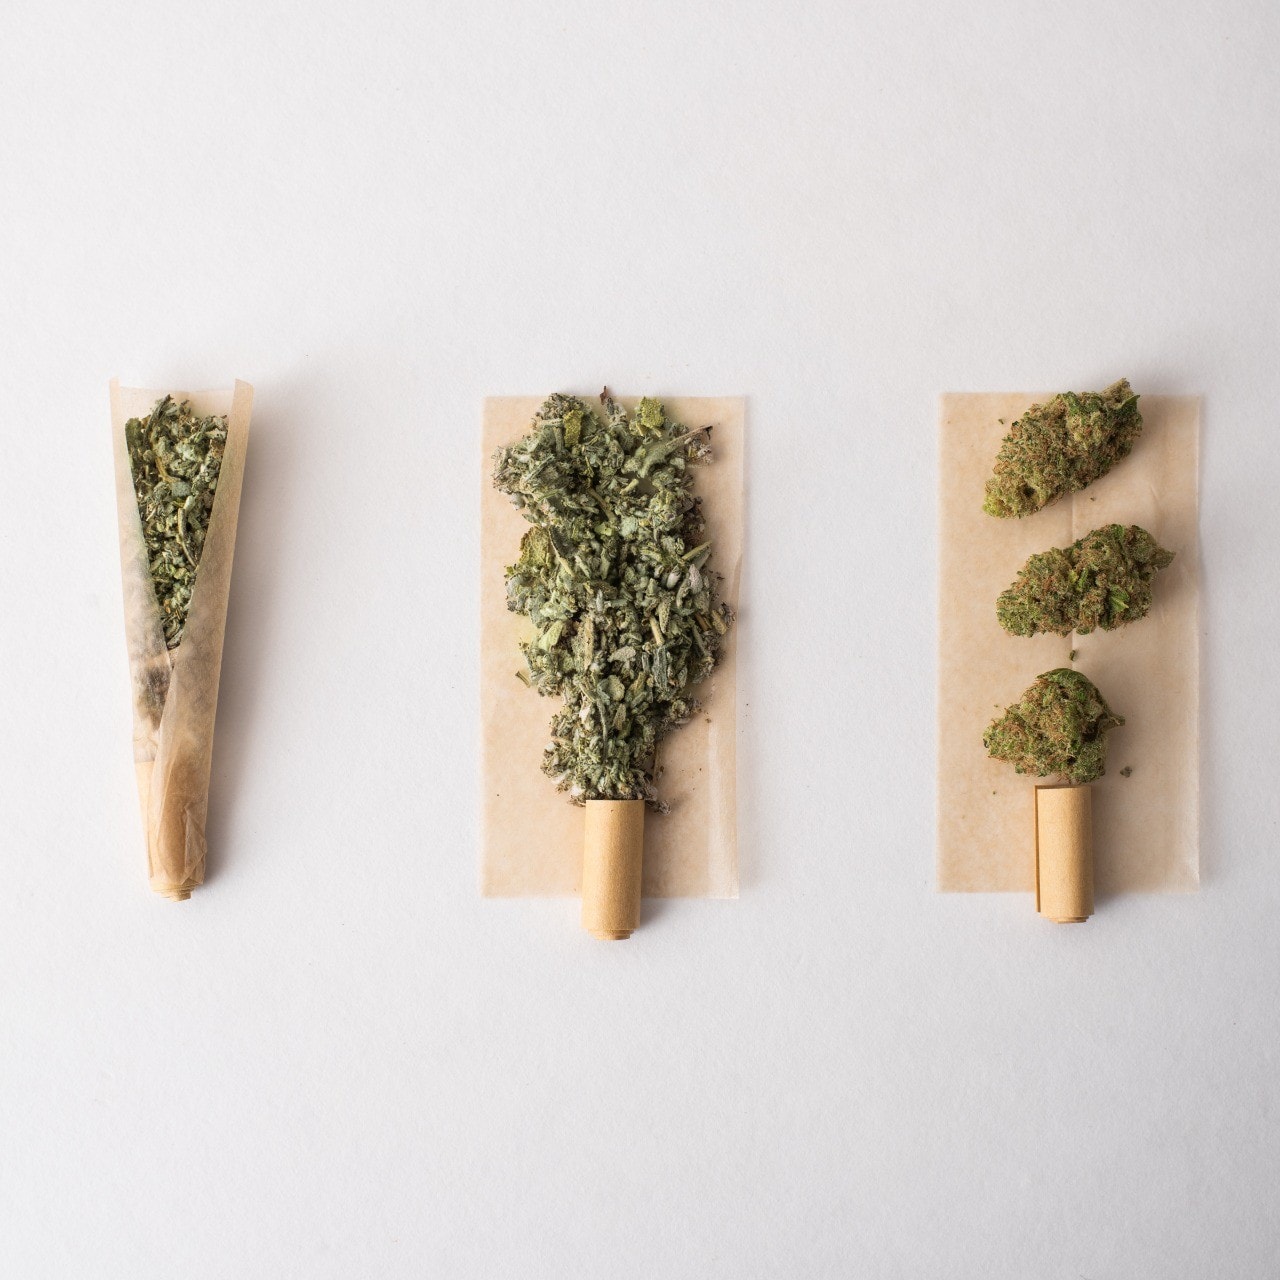 3 Ways To Enjoy Cannabis Responsibly